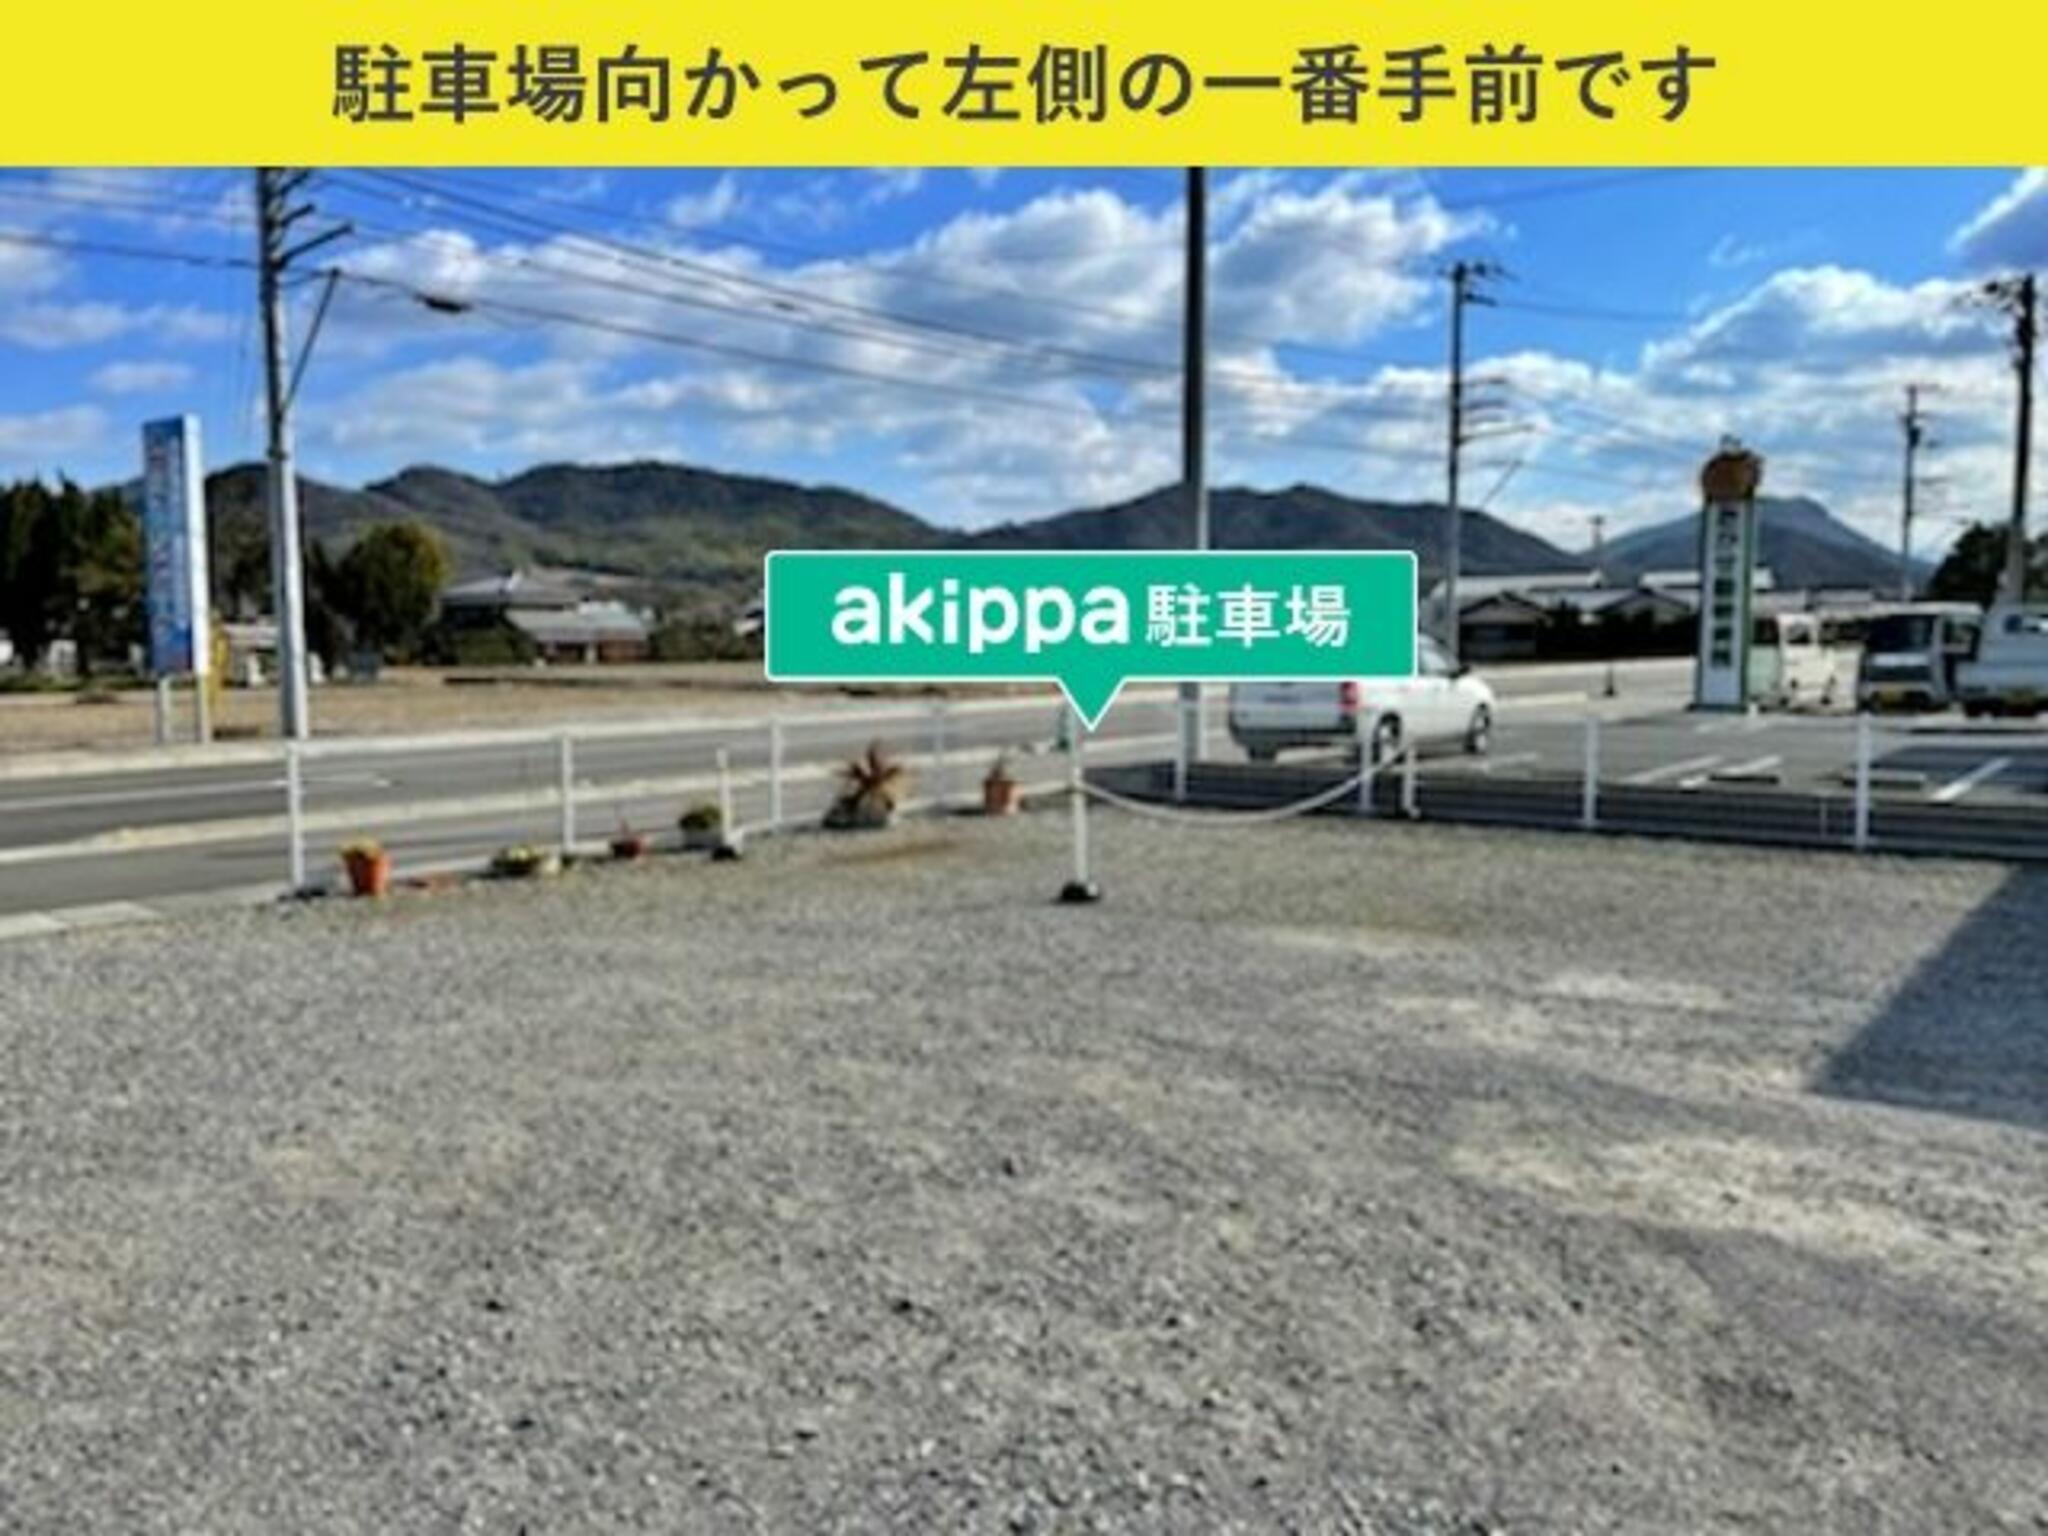 akippa駐車場:香川県三豊市高瀬町上高瀬1534の代表写真3